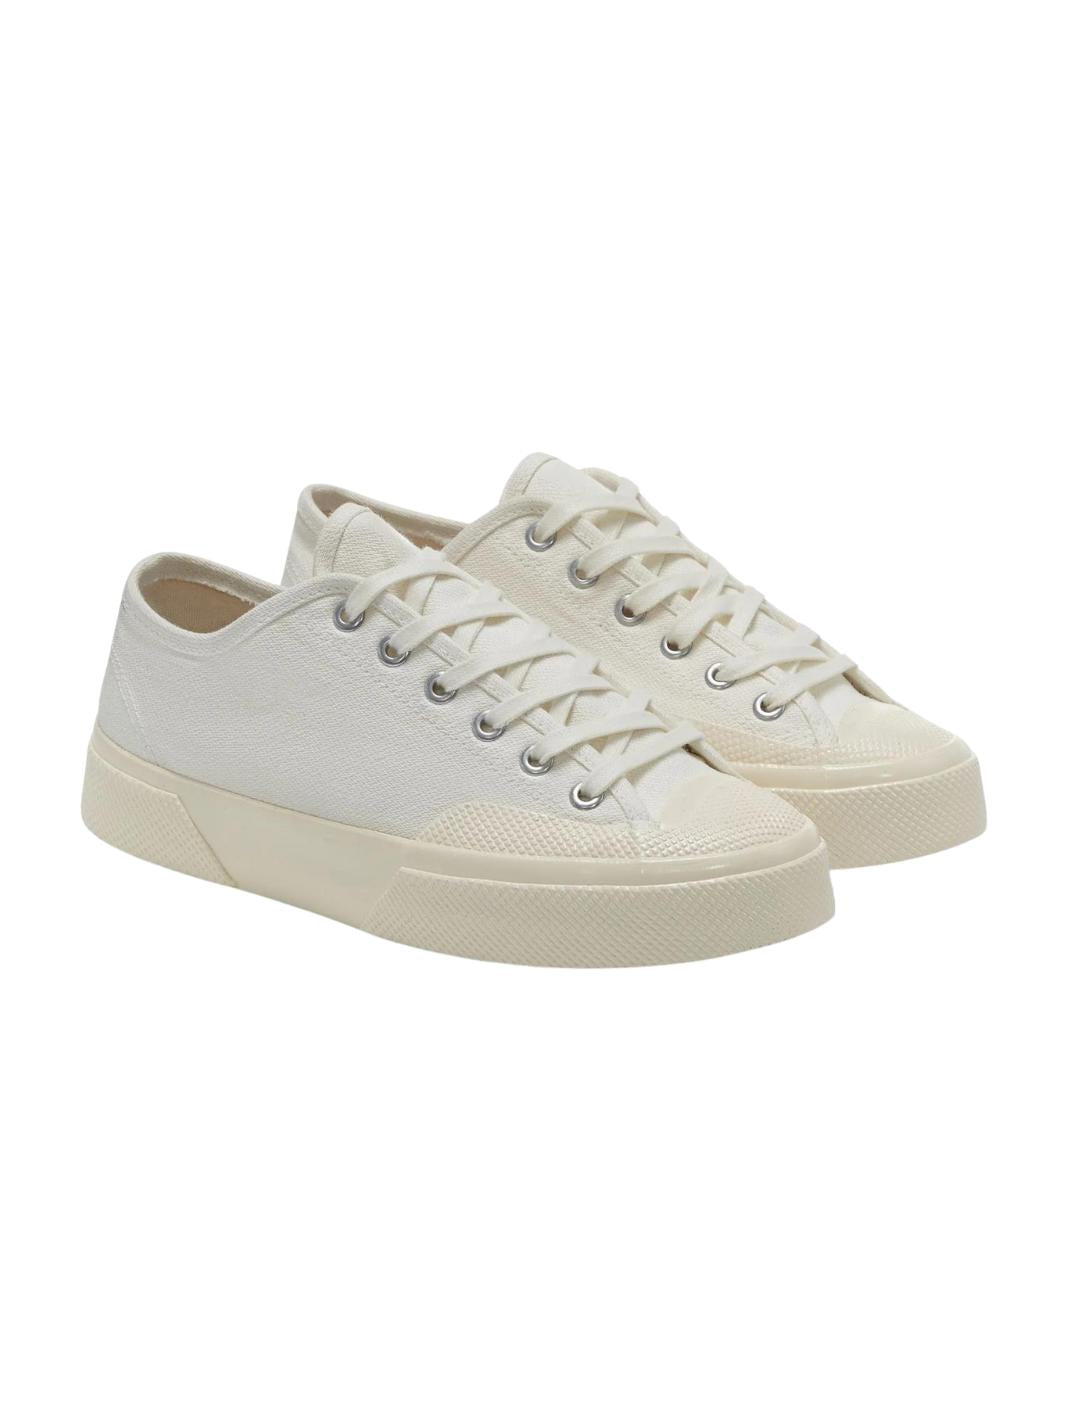 Superga Shoes Sneakers | Artifact 2432 Workwear White/Off-White